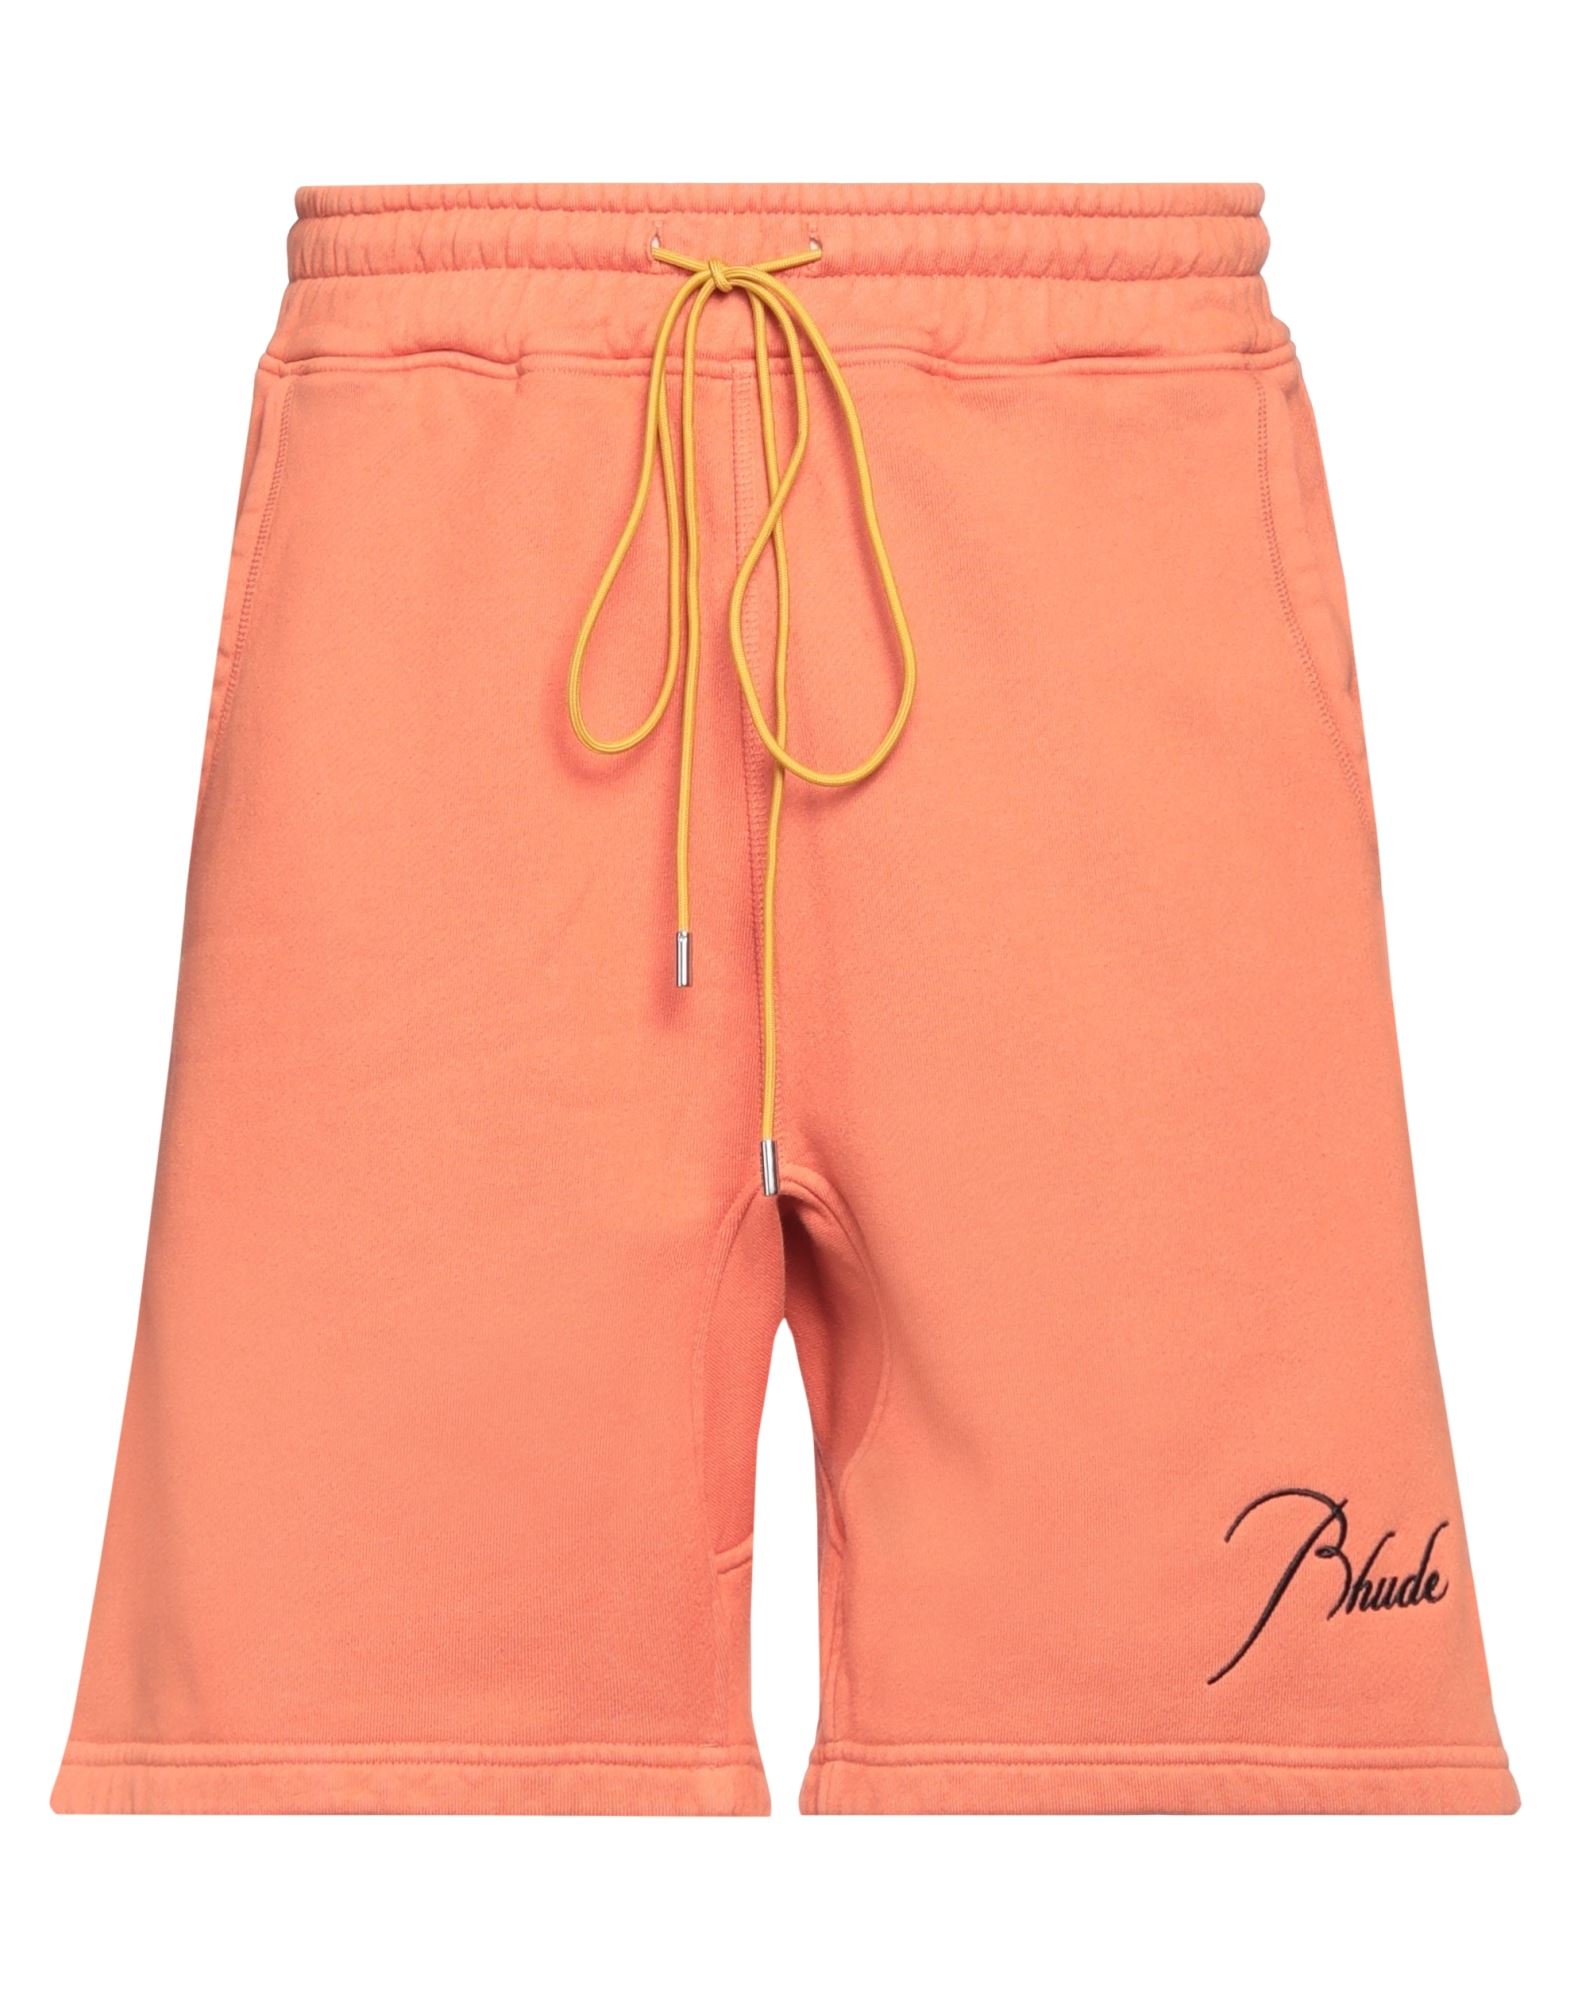 RHUDE Shorts & Bermudashorts Herren Orange von RHUDE